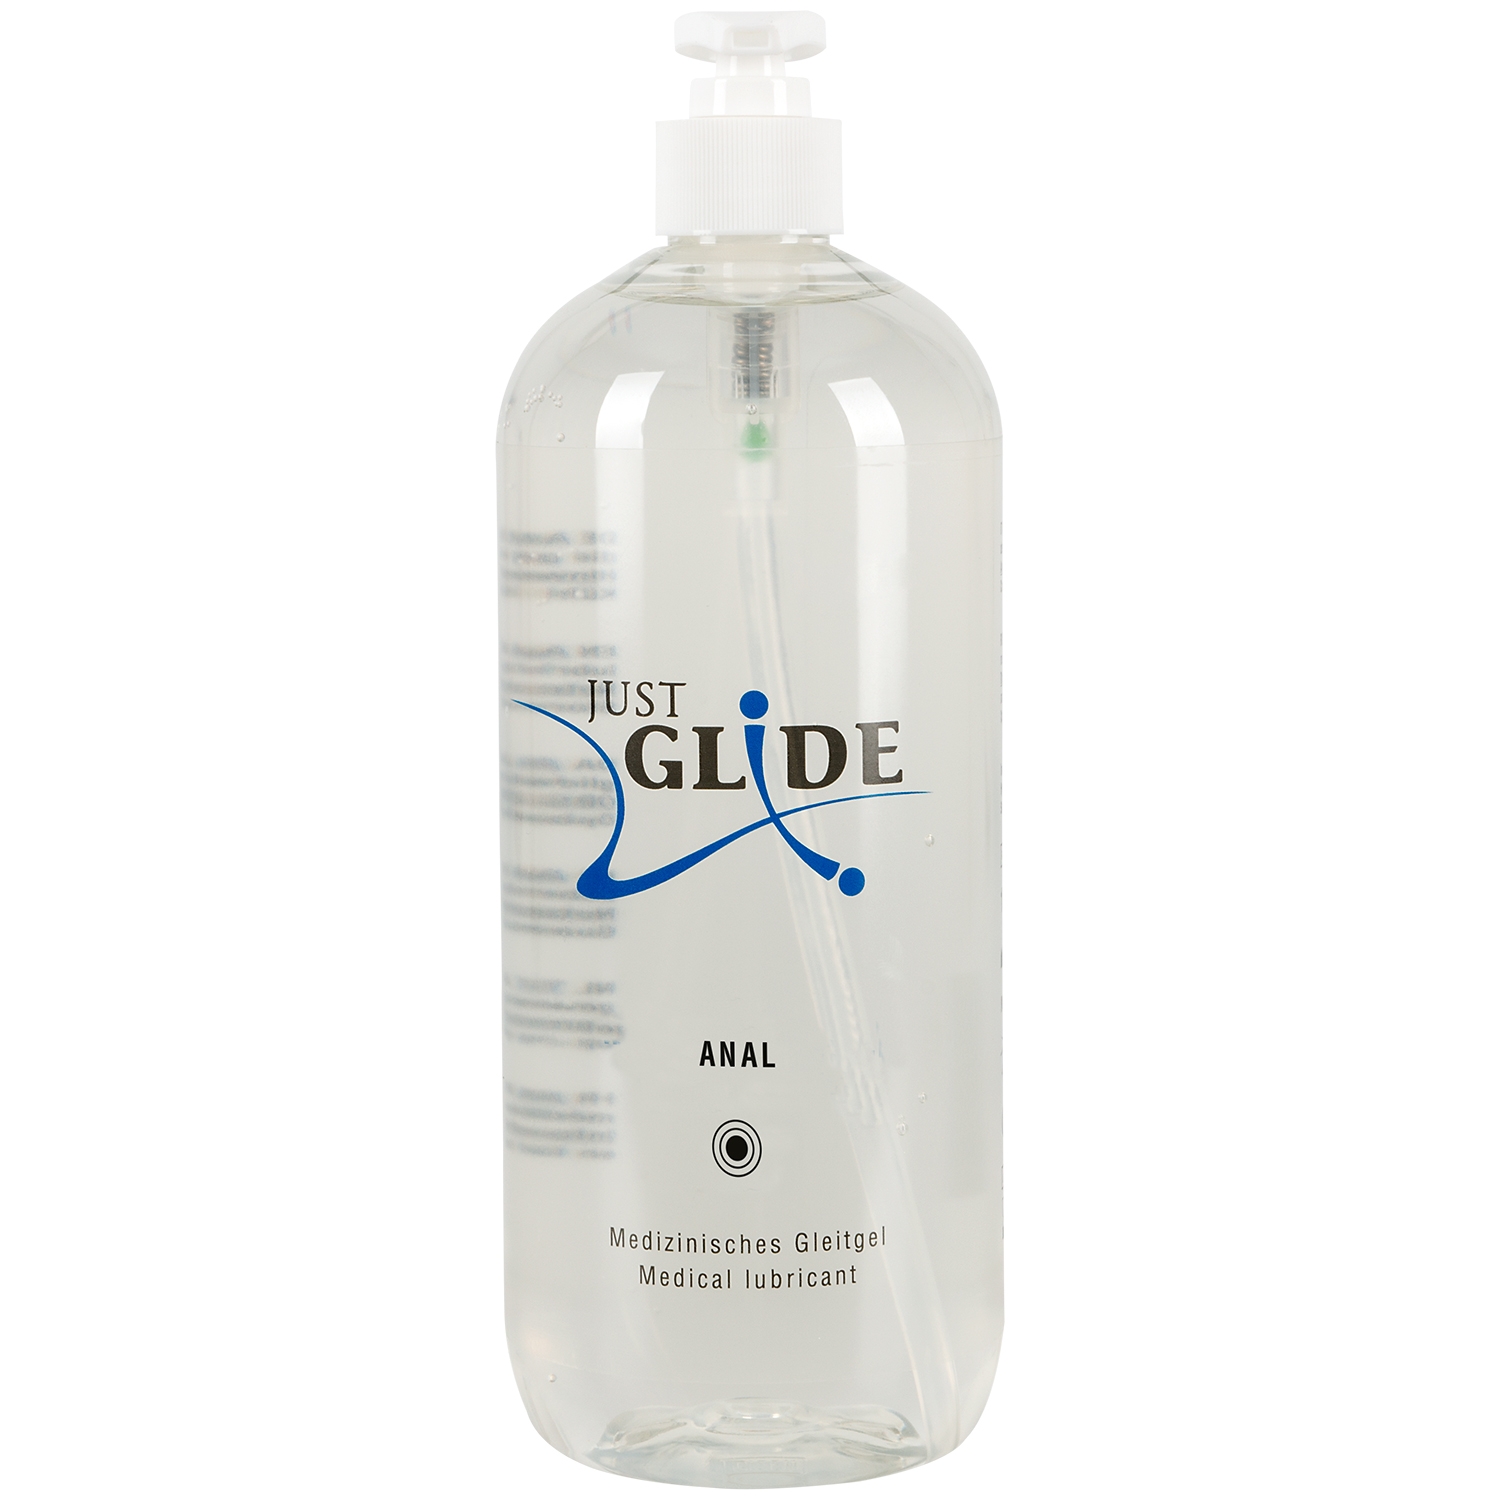 Just Glide Anal Glidecreme 1000 ml - Clear